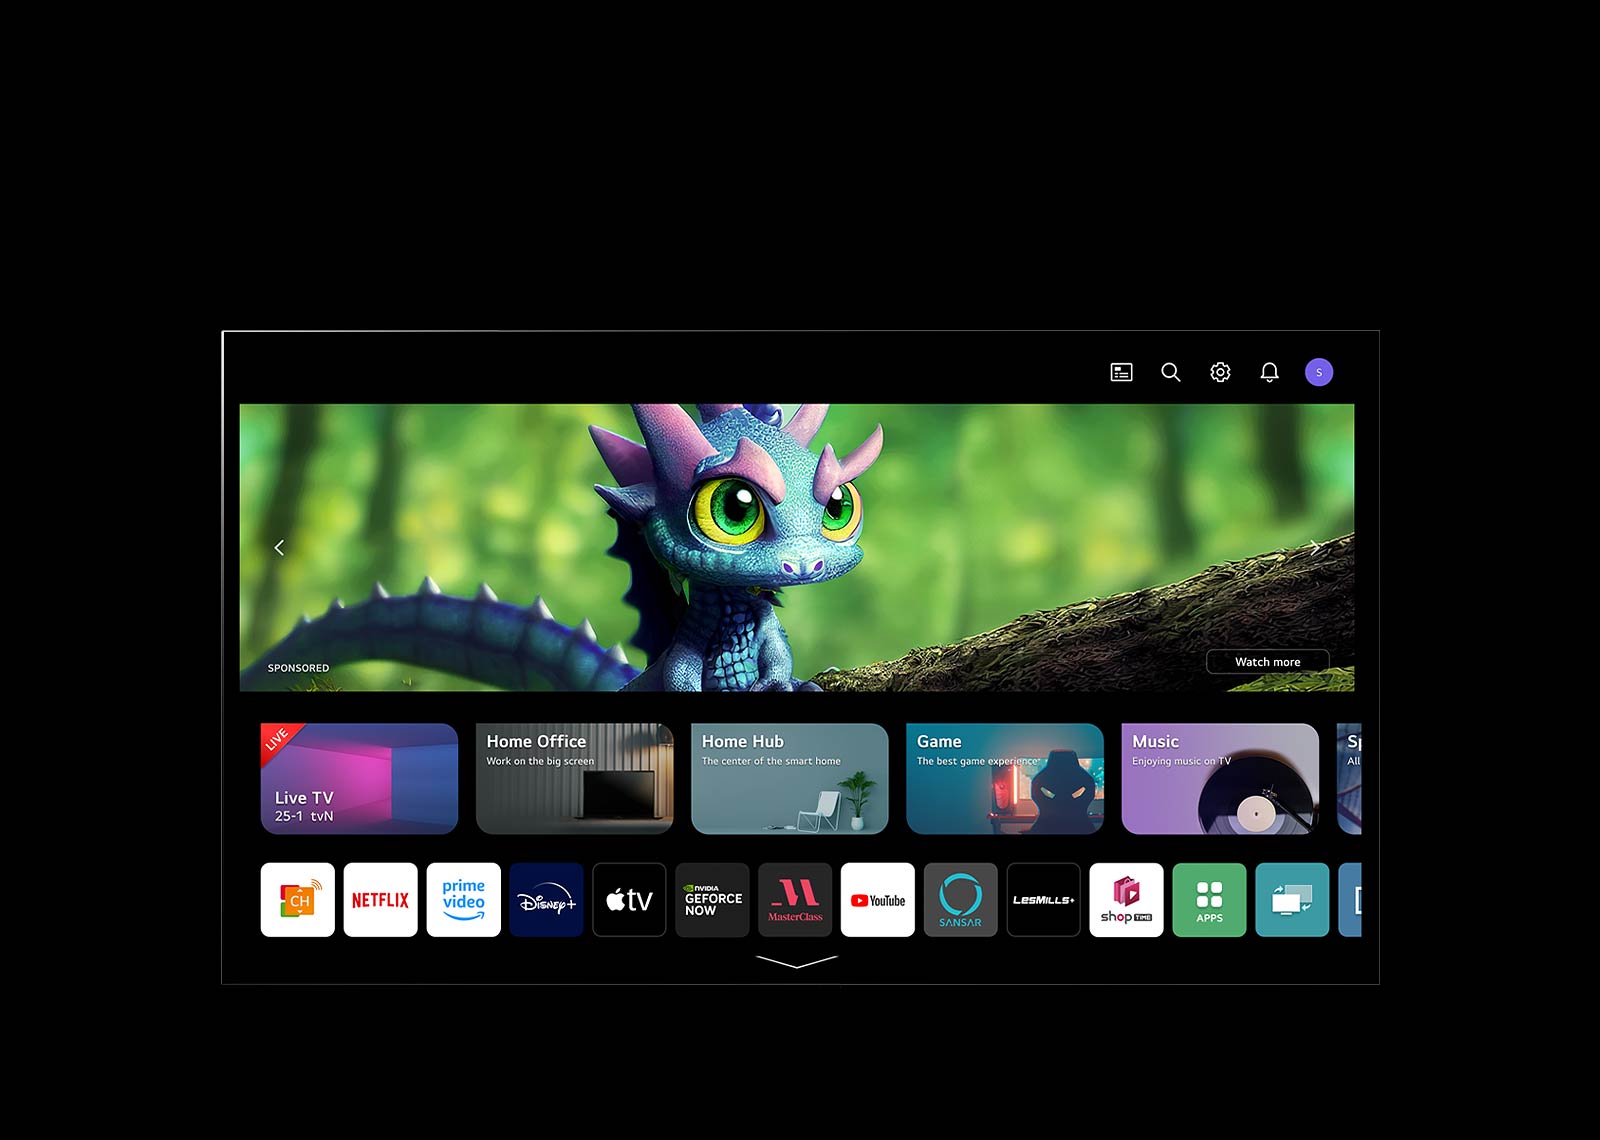 Video s domovskou obrazovku WebOS. Kurzor klikne na písmeno v pravém horním rohu a otevře jiný profil.